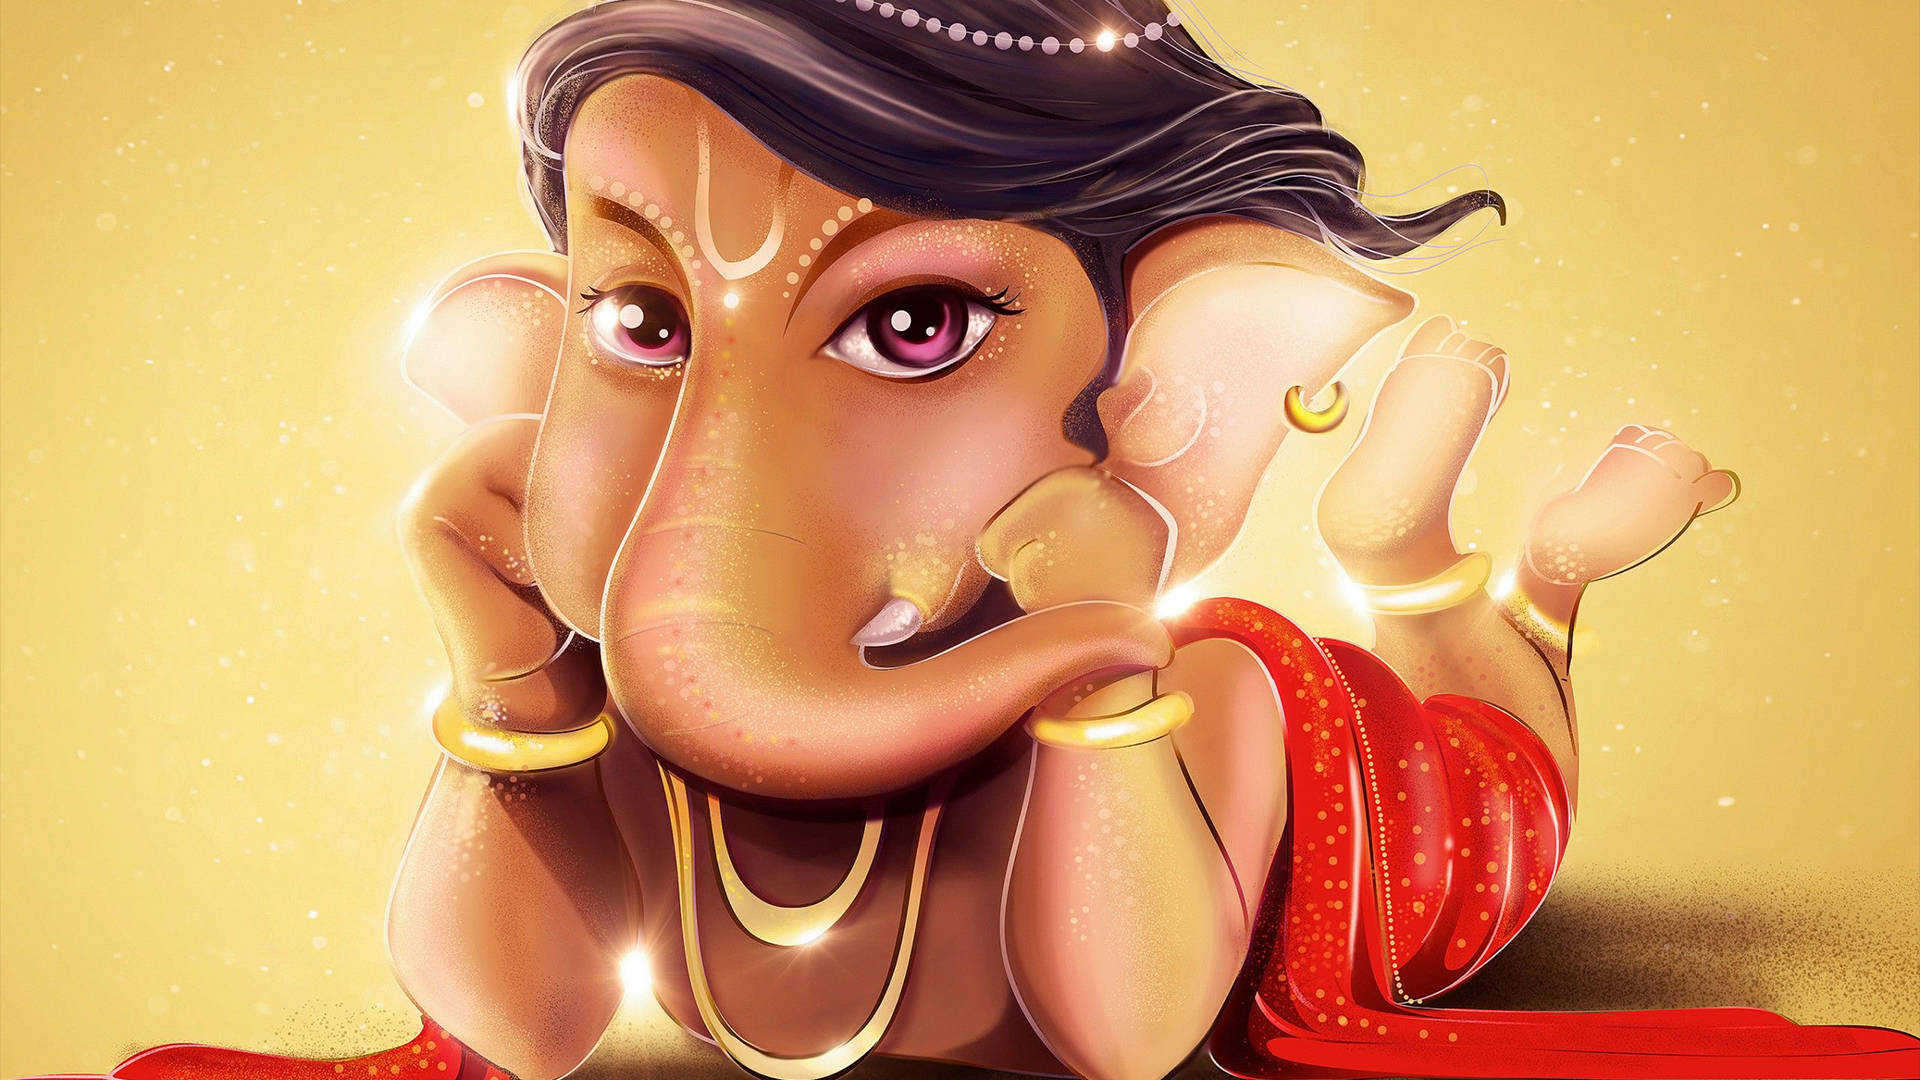 Free Ganesha Wallpaper Downloads, [400+] Ganesha Wallpapers for FREE |  